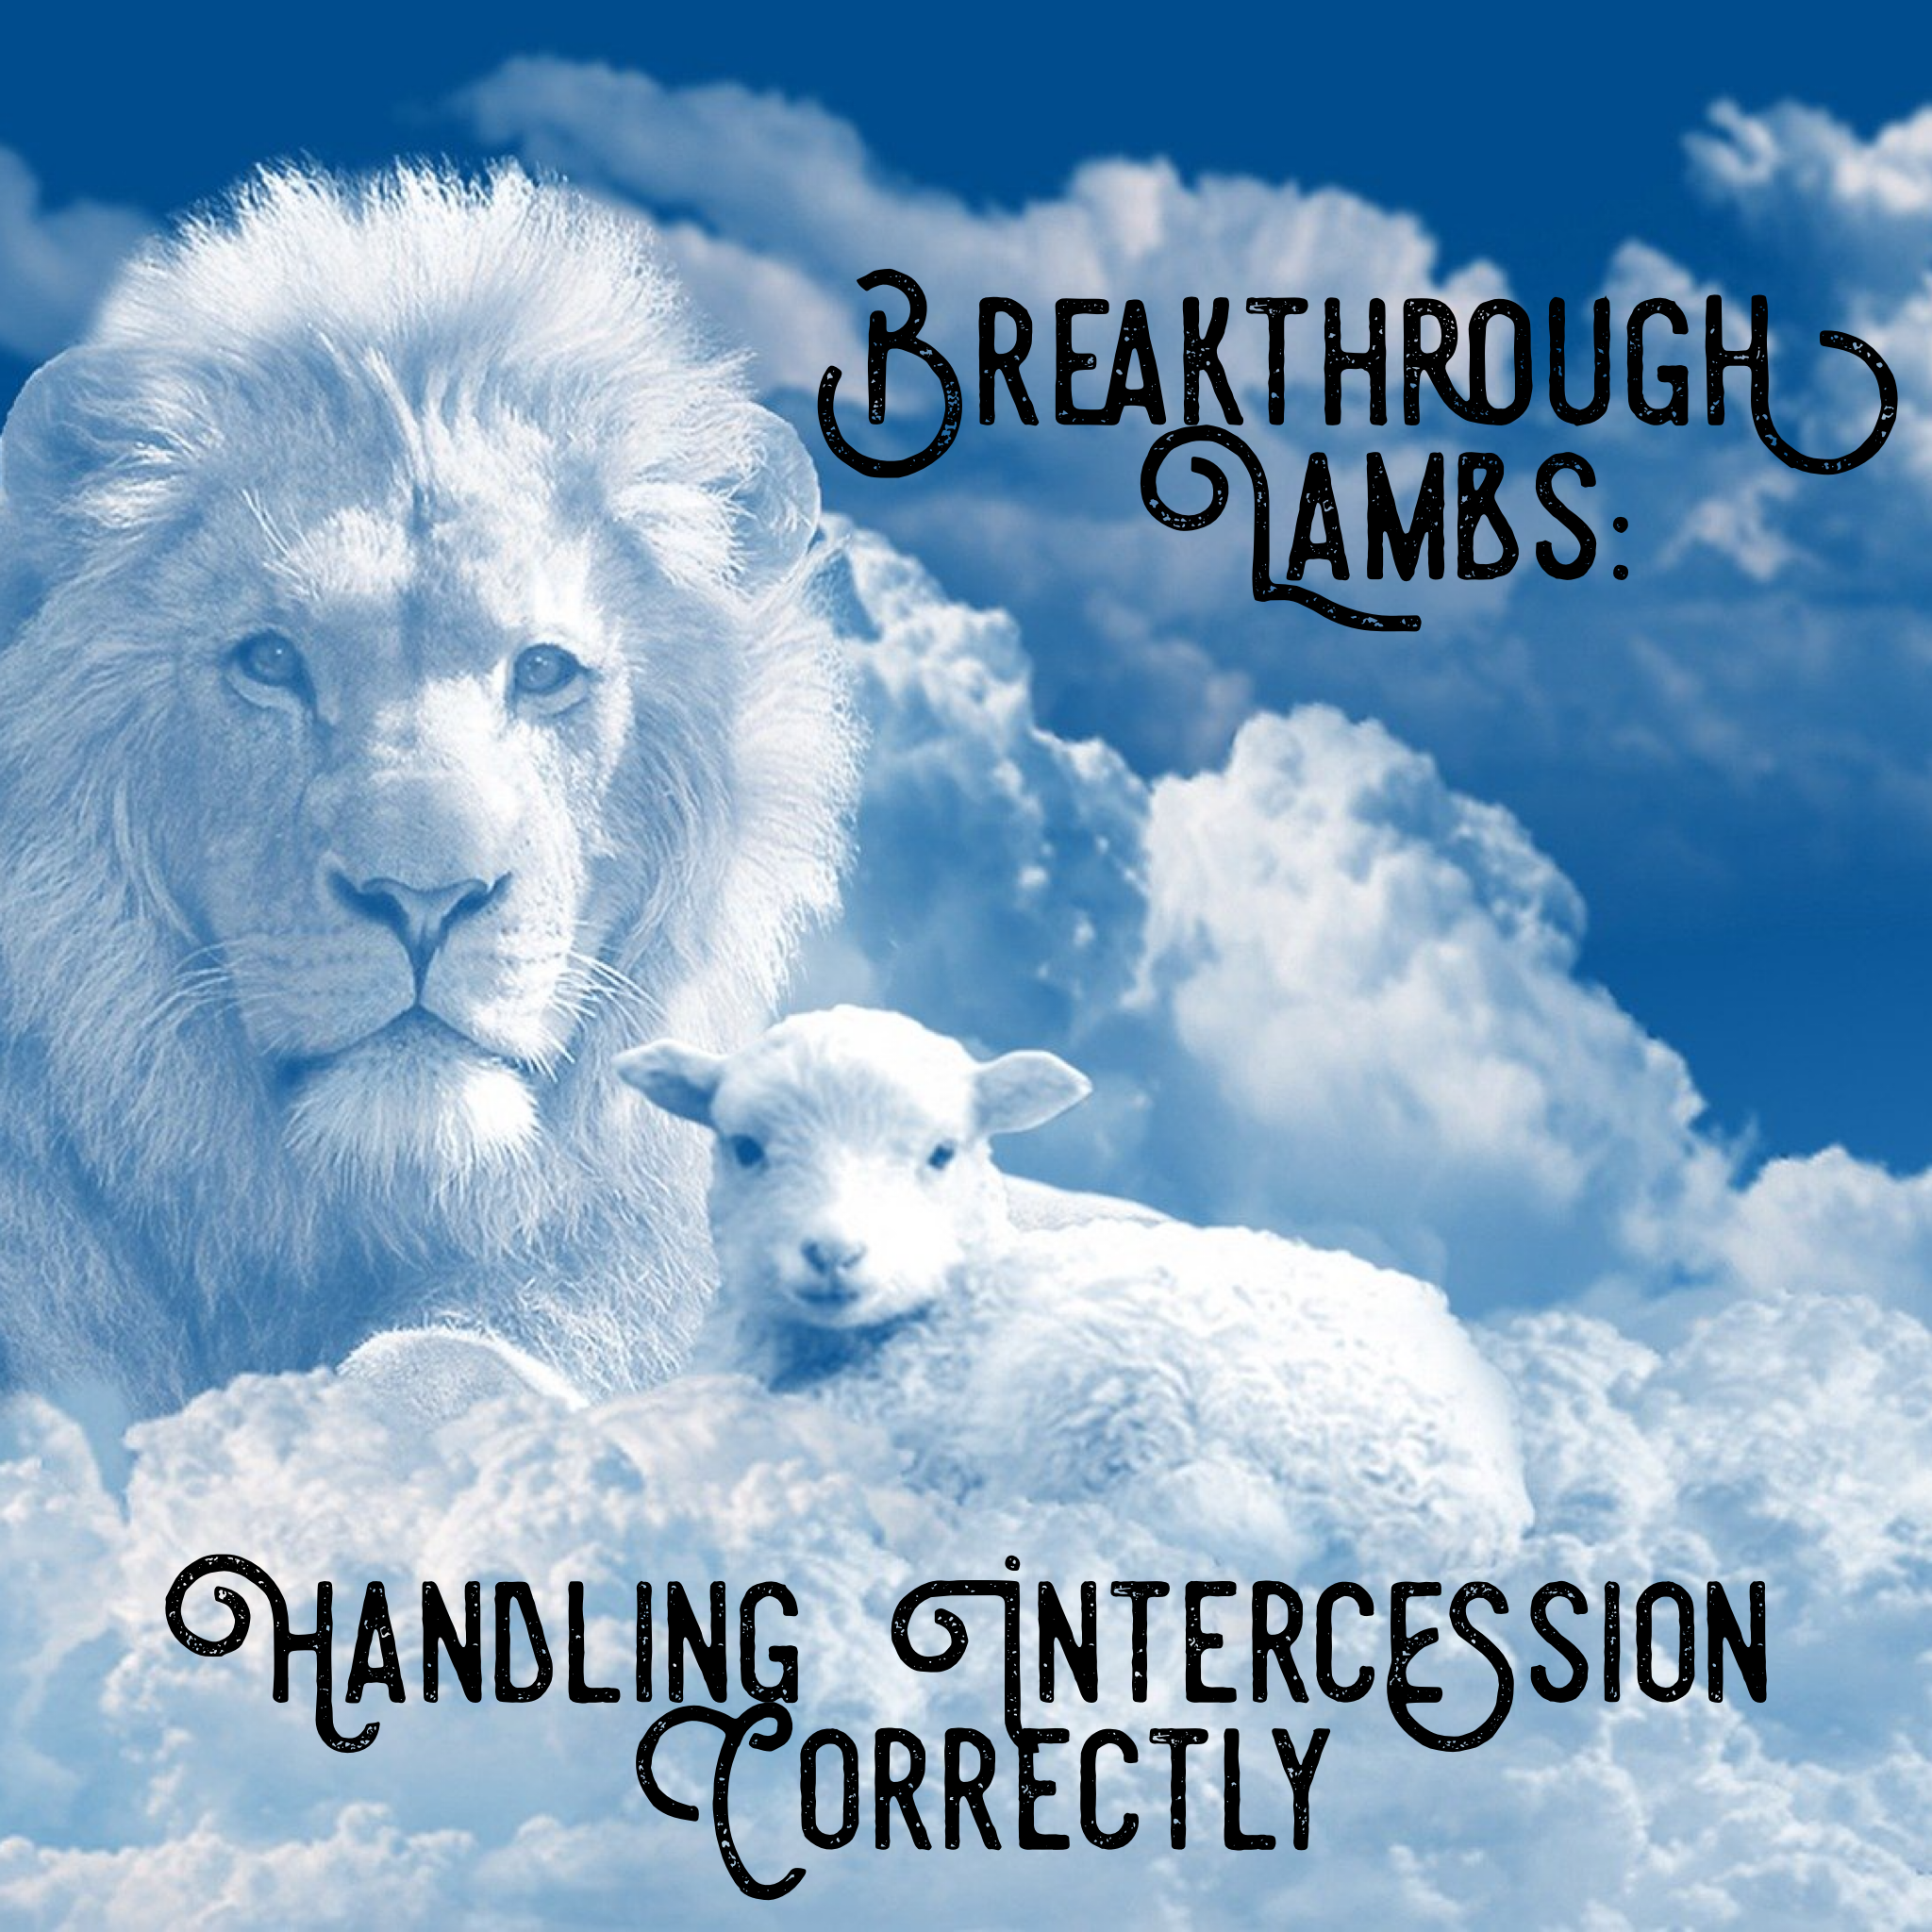 Breakthrough Lambs: Handling Intercession Correctly - 4/11/21